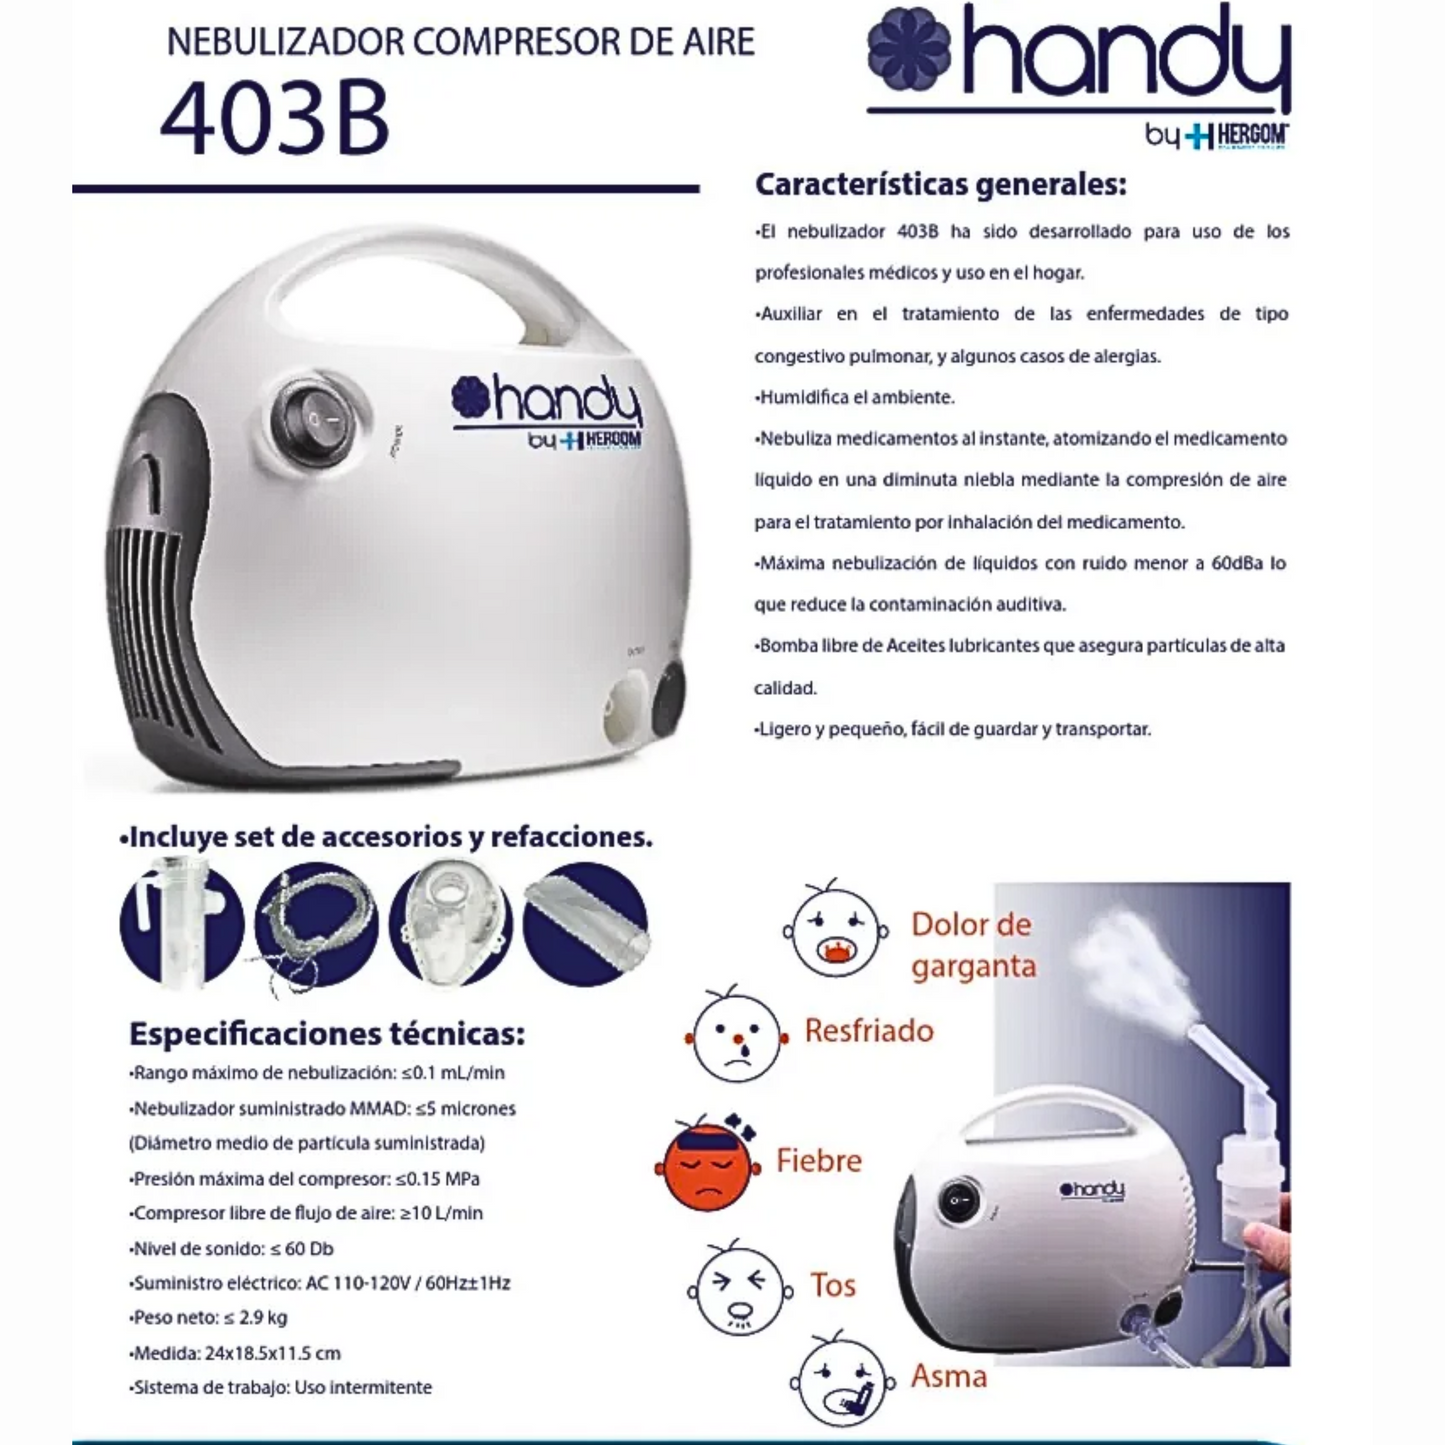 Compresor Nebulizador de Aire Comprimido Handy 403B